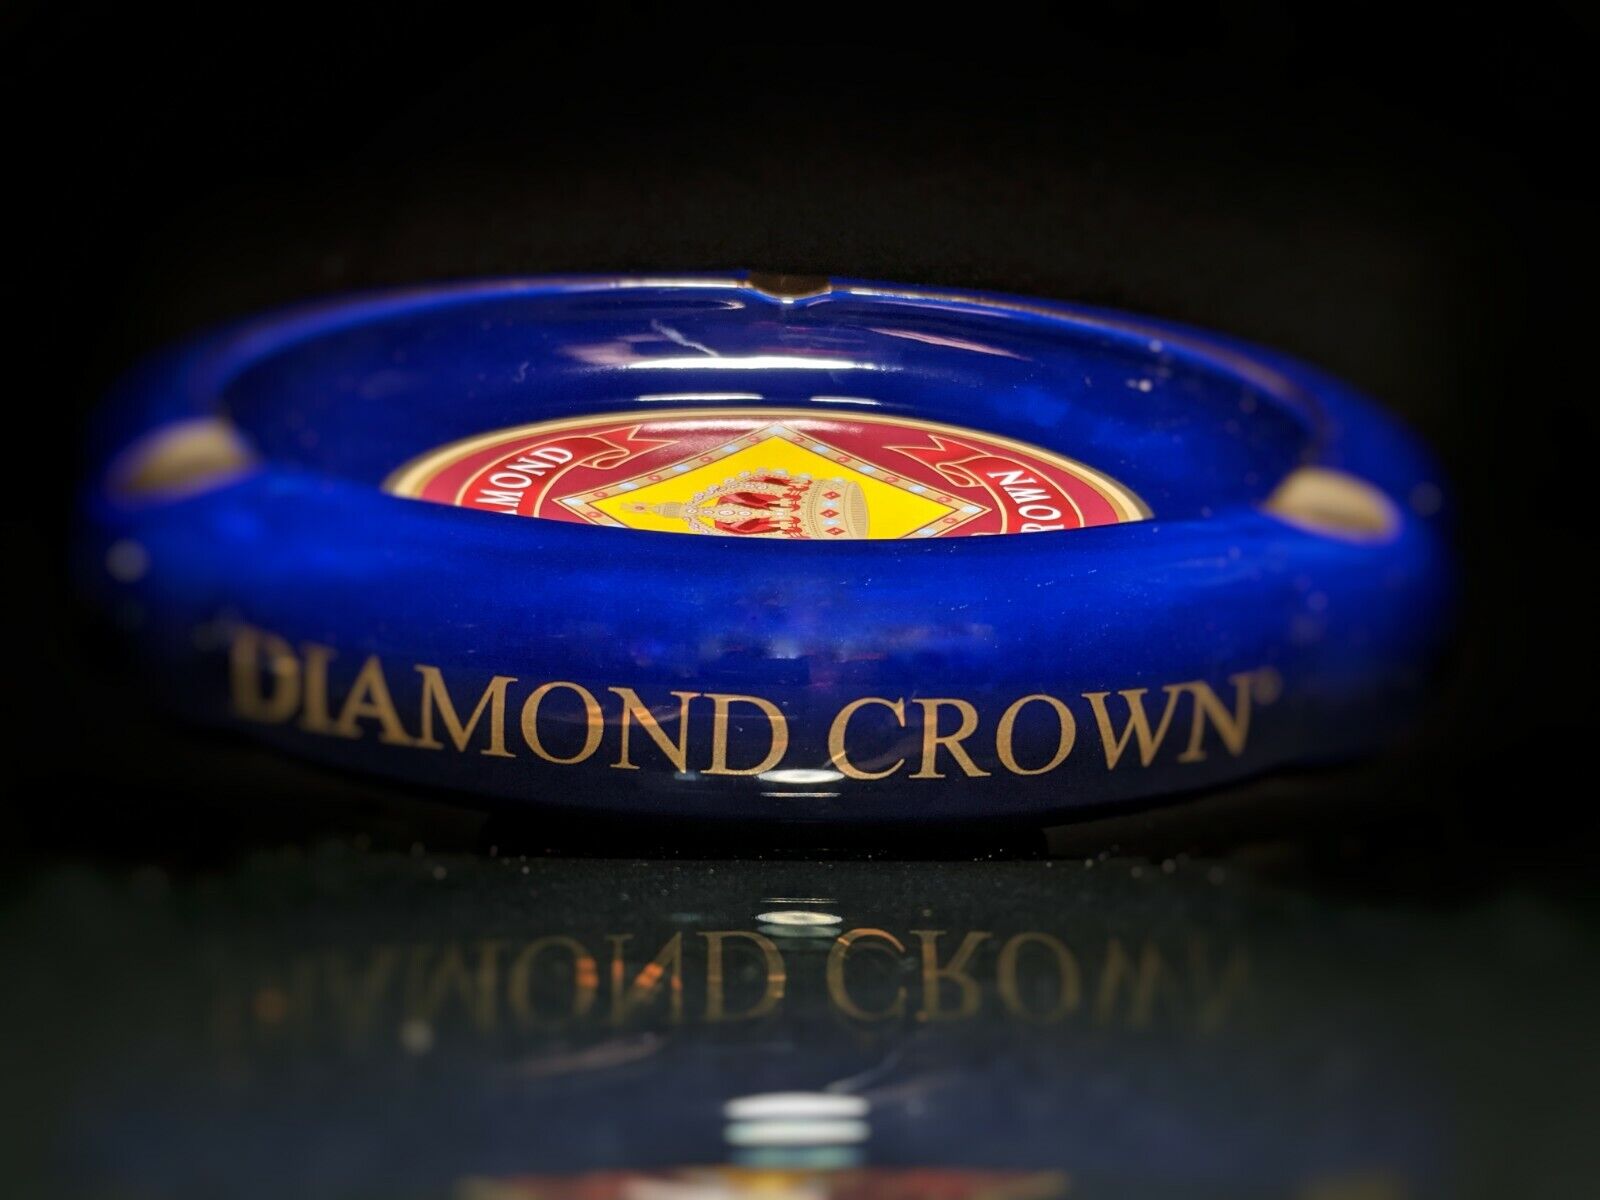 Diamond Crown Large Size Ceramic Ashtray NIB